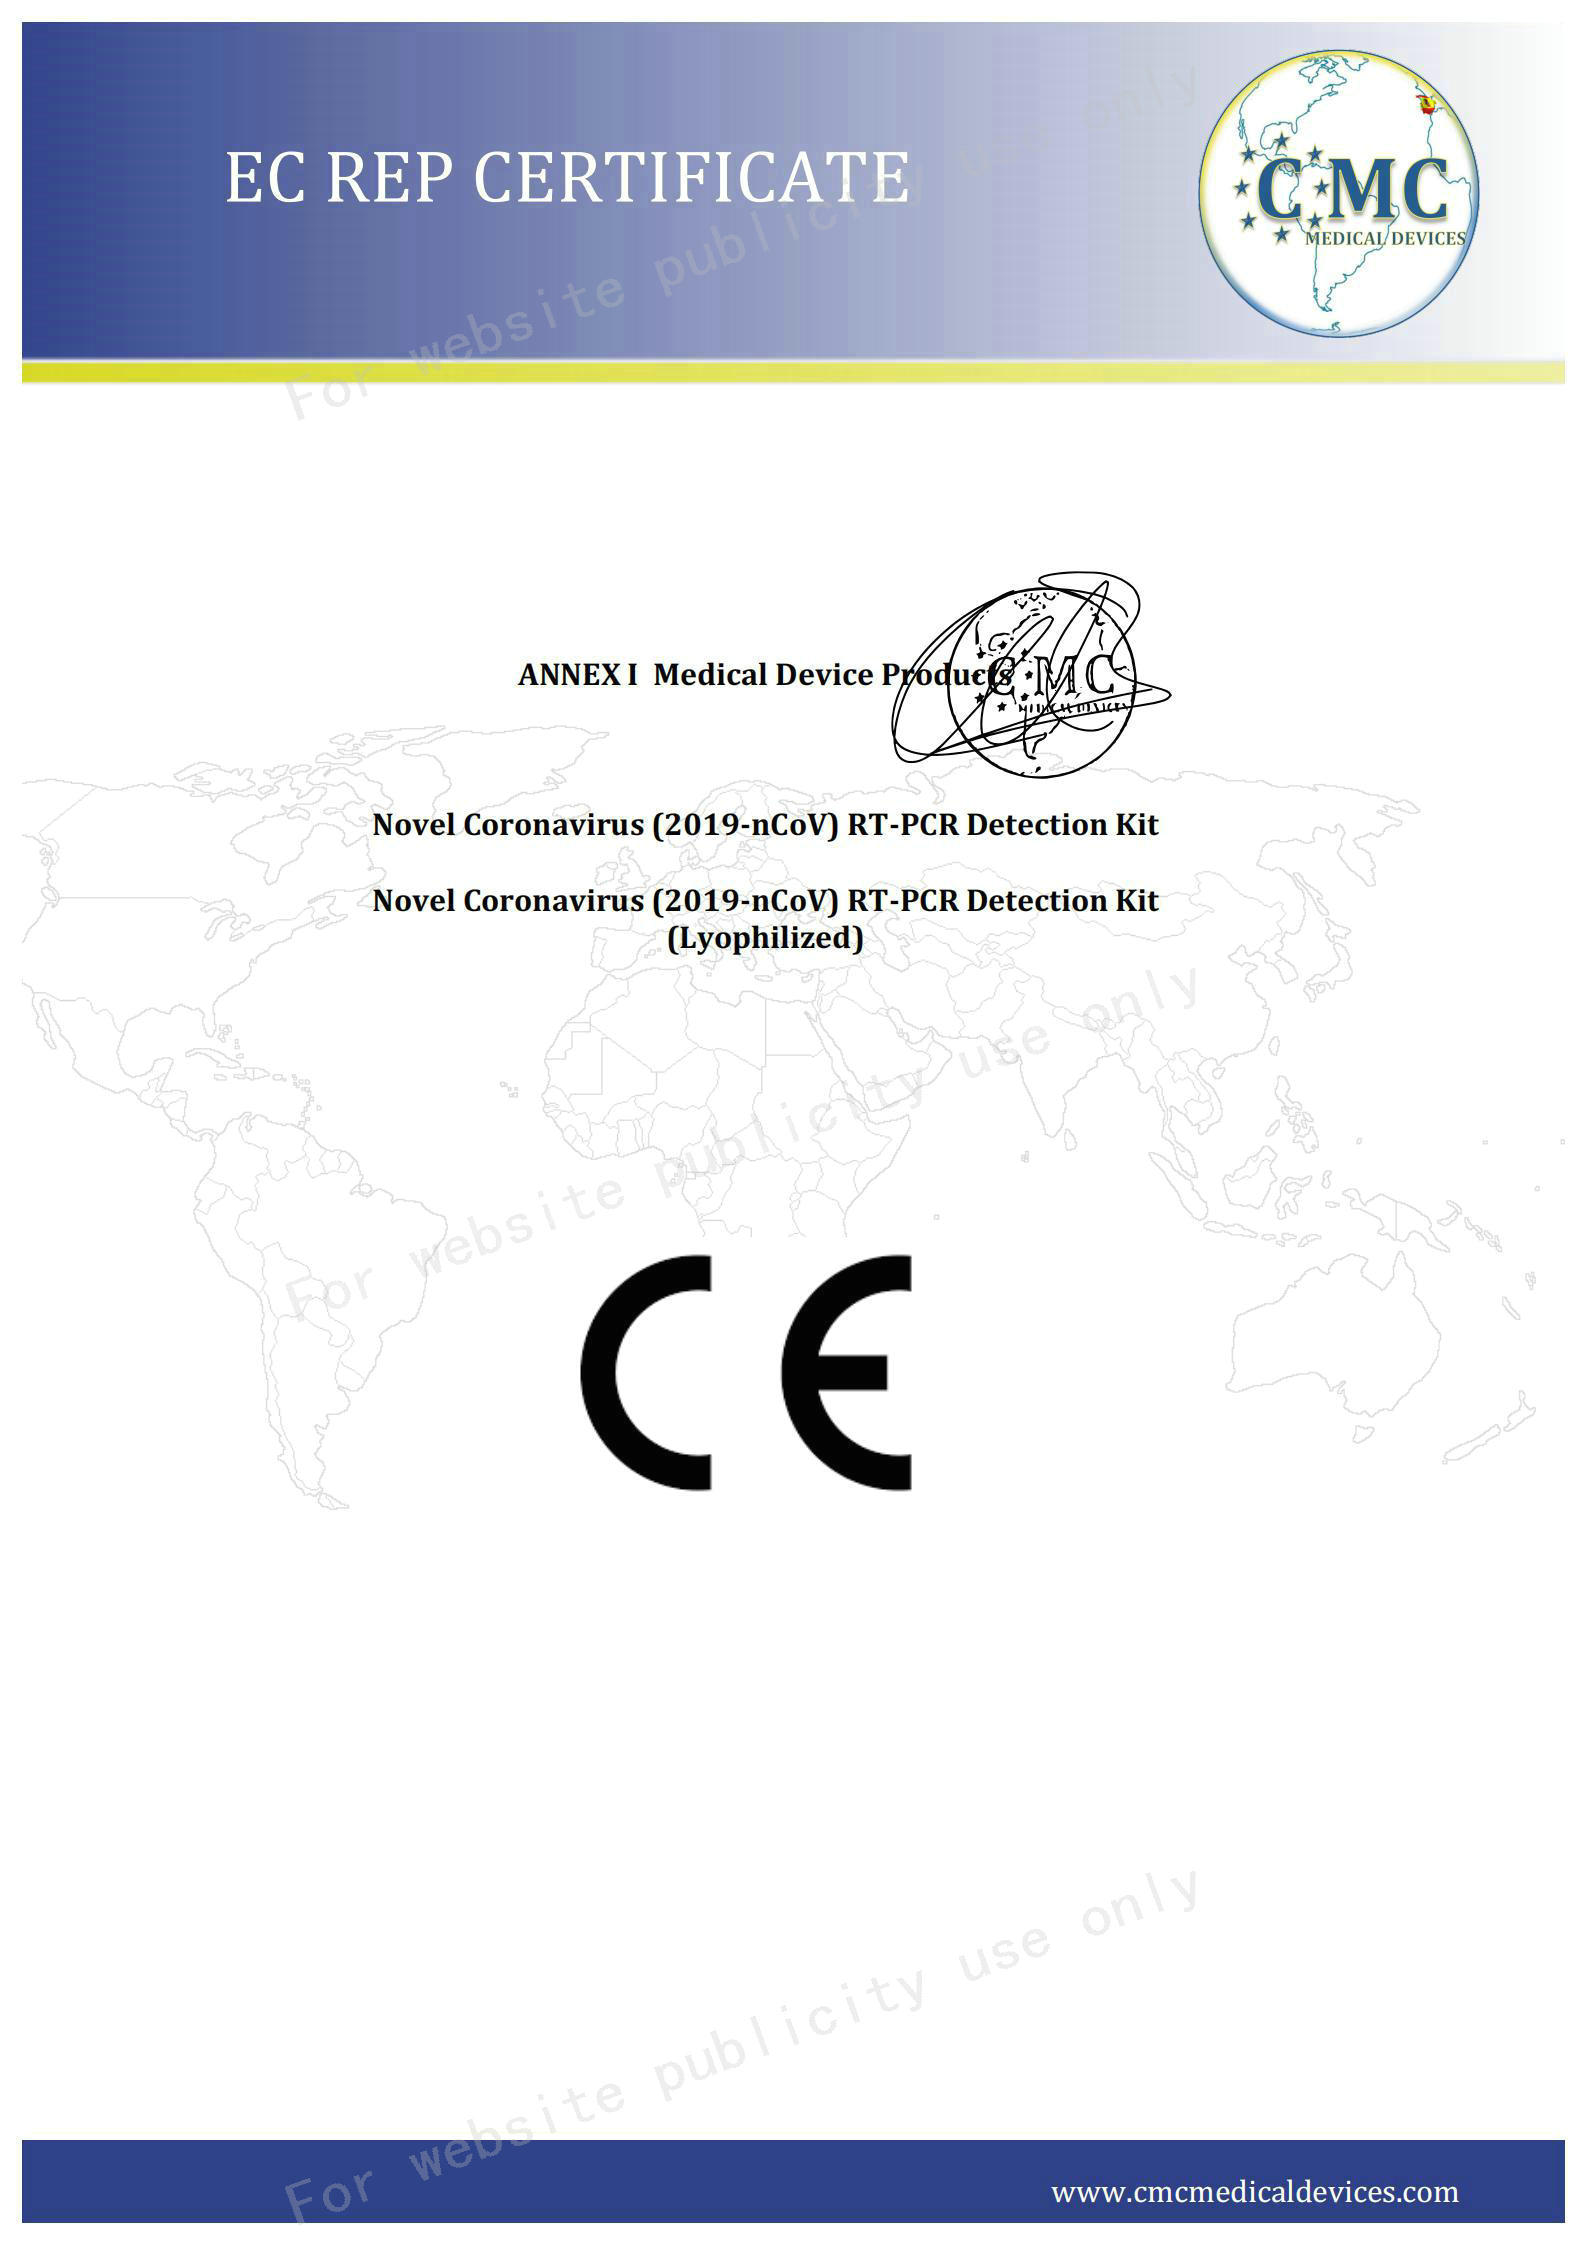 02 sertifikat CE kaca2